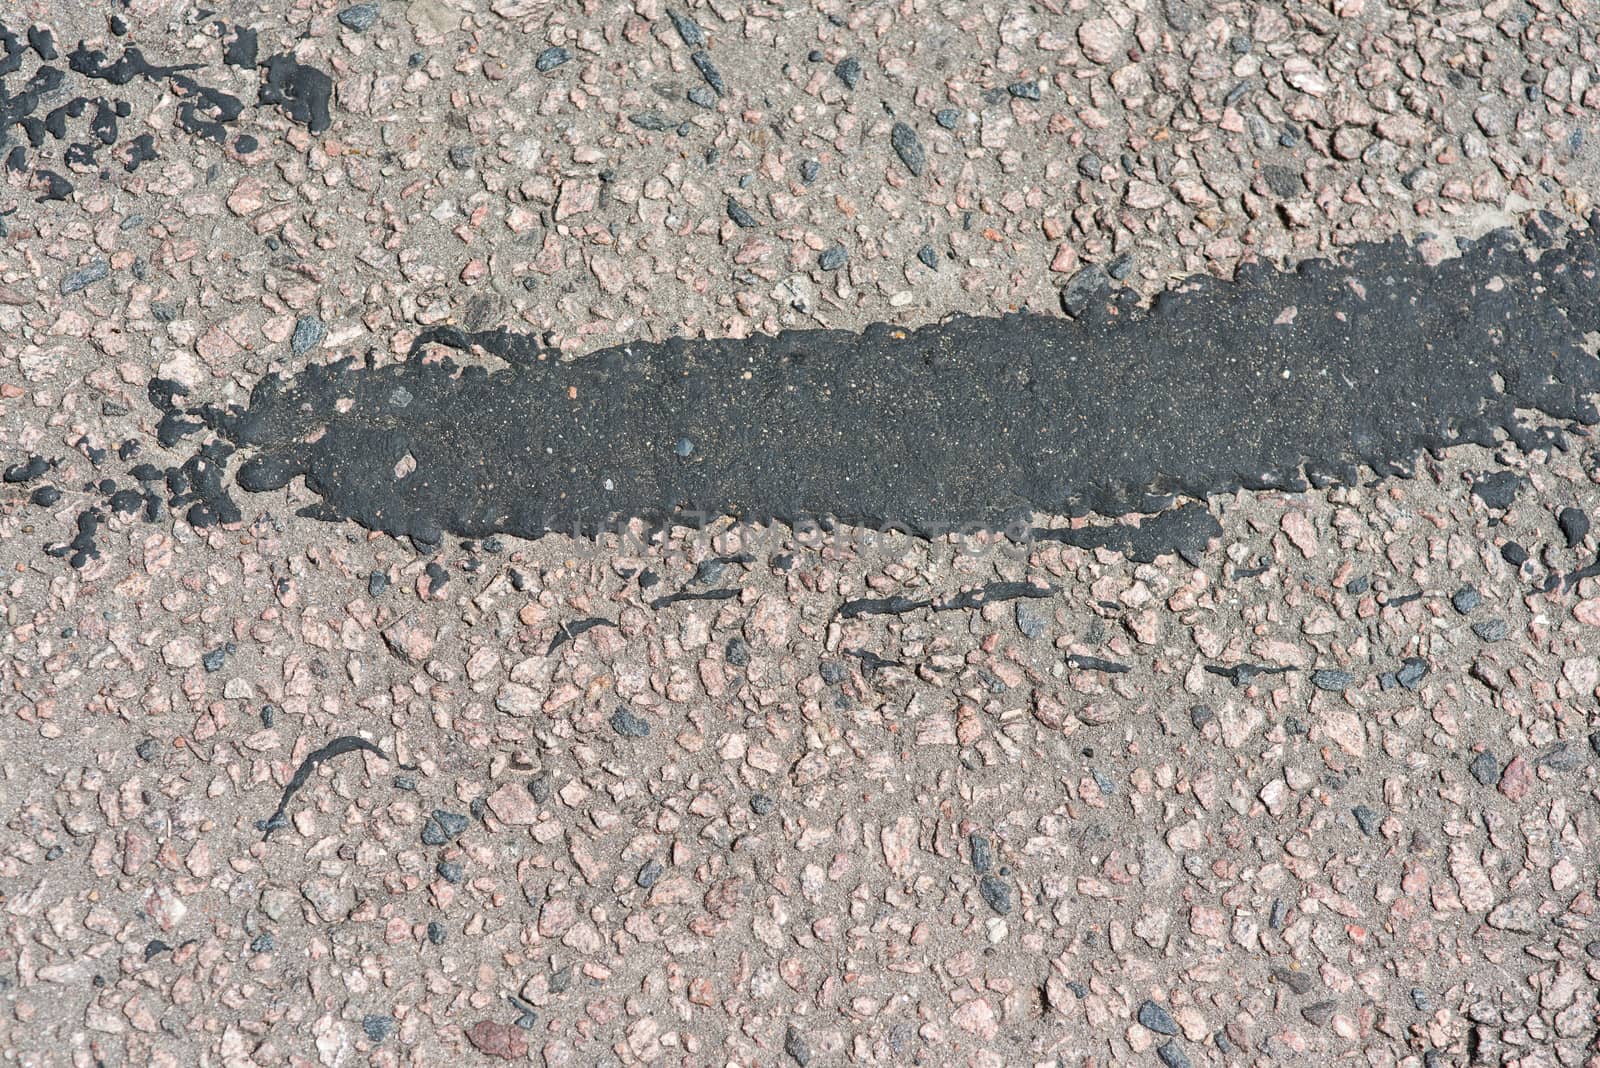 asphalt texture with big black spots by skrotov